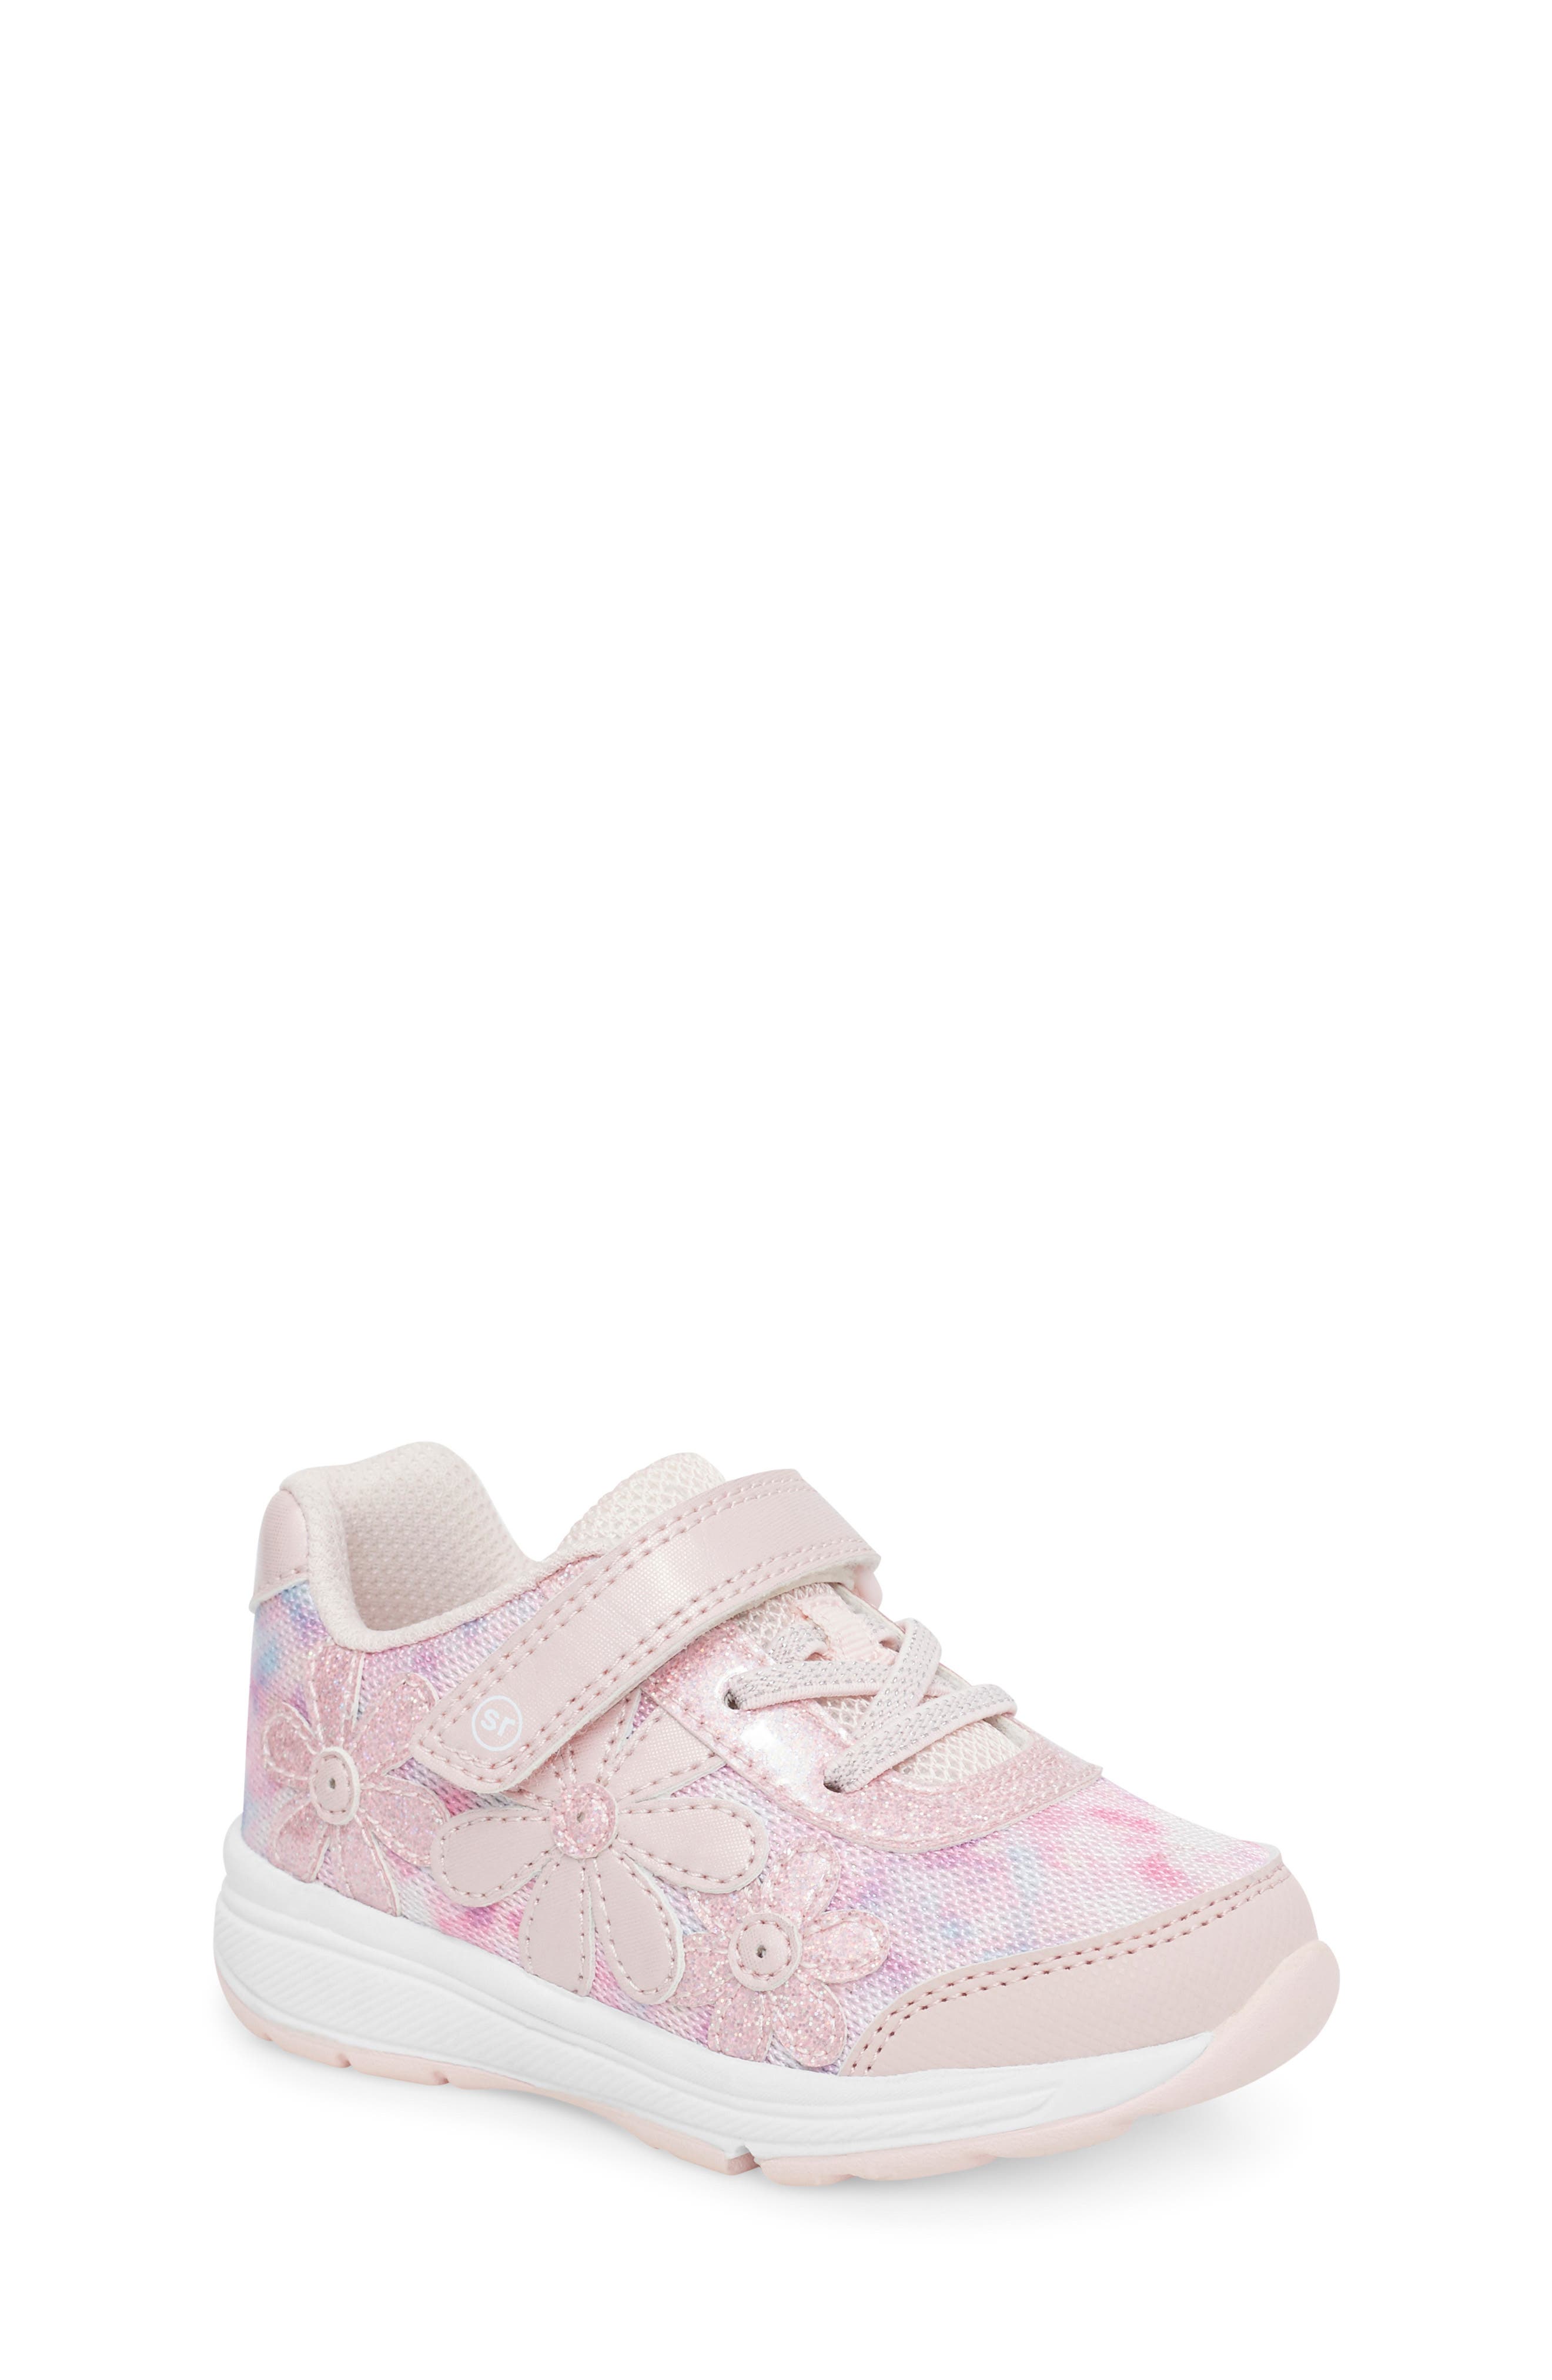 Baby / Toddler Pink Fleece-lining Prewalker Shoes